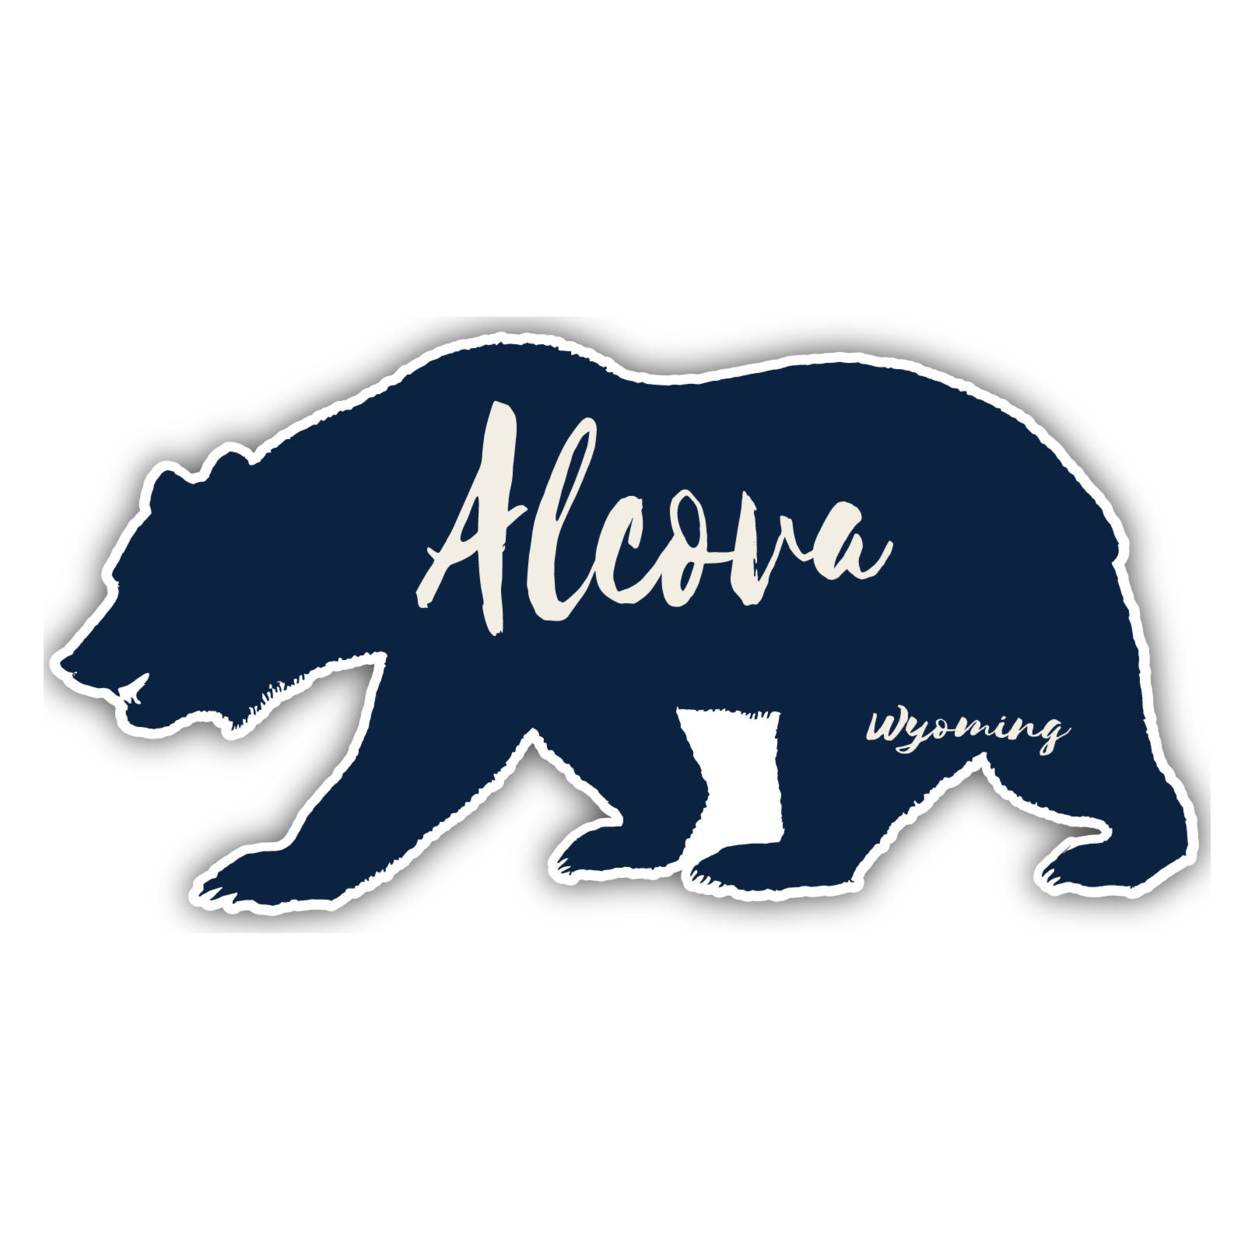 Alcova Wyoming Souvenir Decorative Stickers (Choose Theme And Size) - Single Unit, 12-Inch, Bear